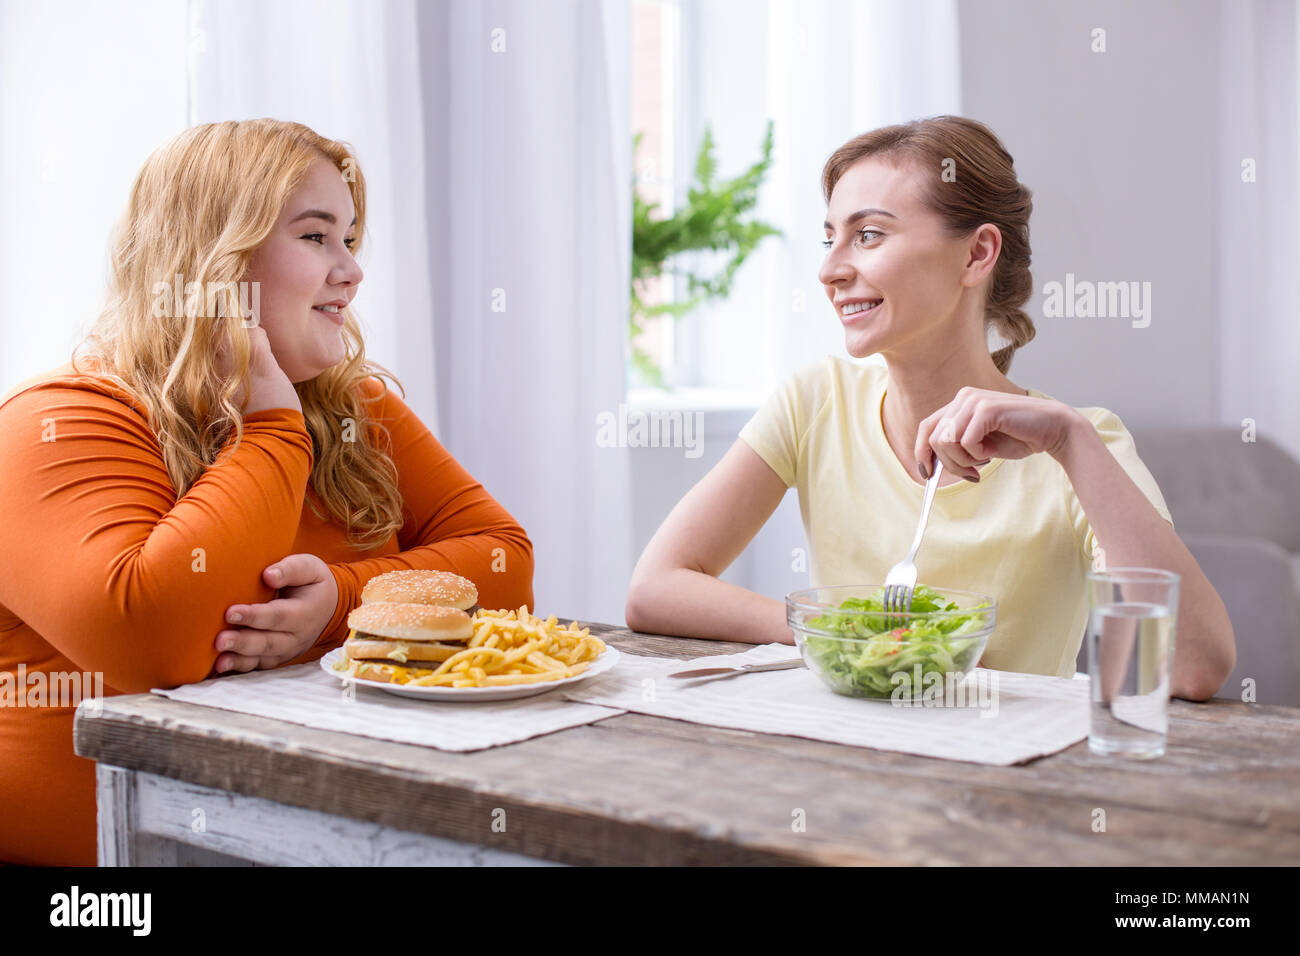 Joyful fat woman having lunch with her friend Stock Photo